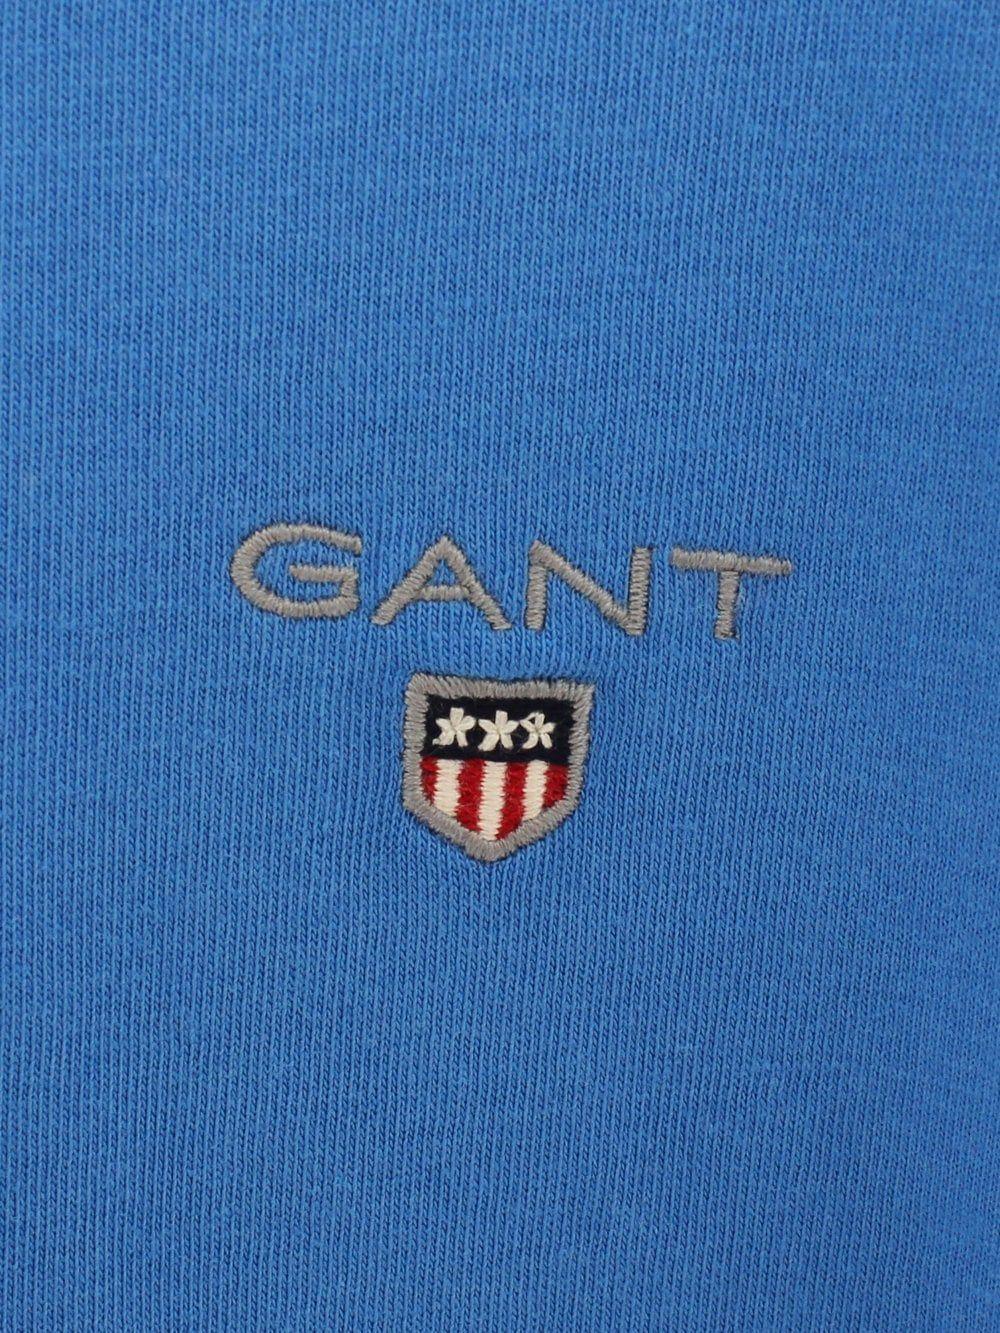 Gant Logo - Original Logo T-Shirt - Palace Blue